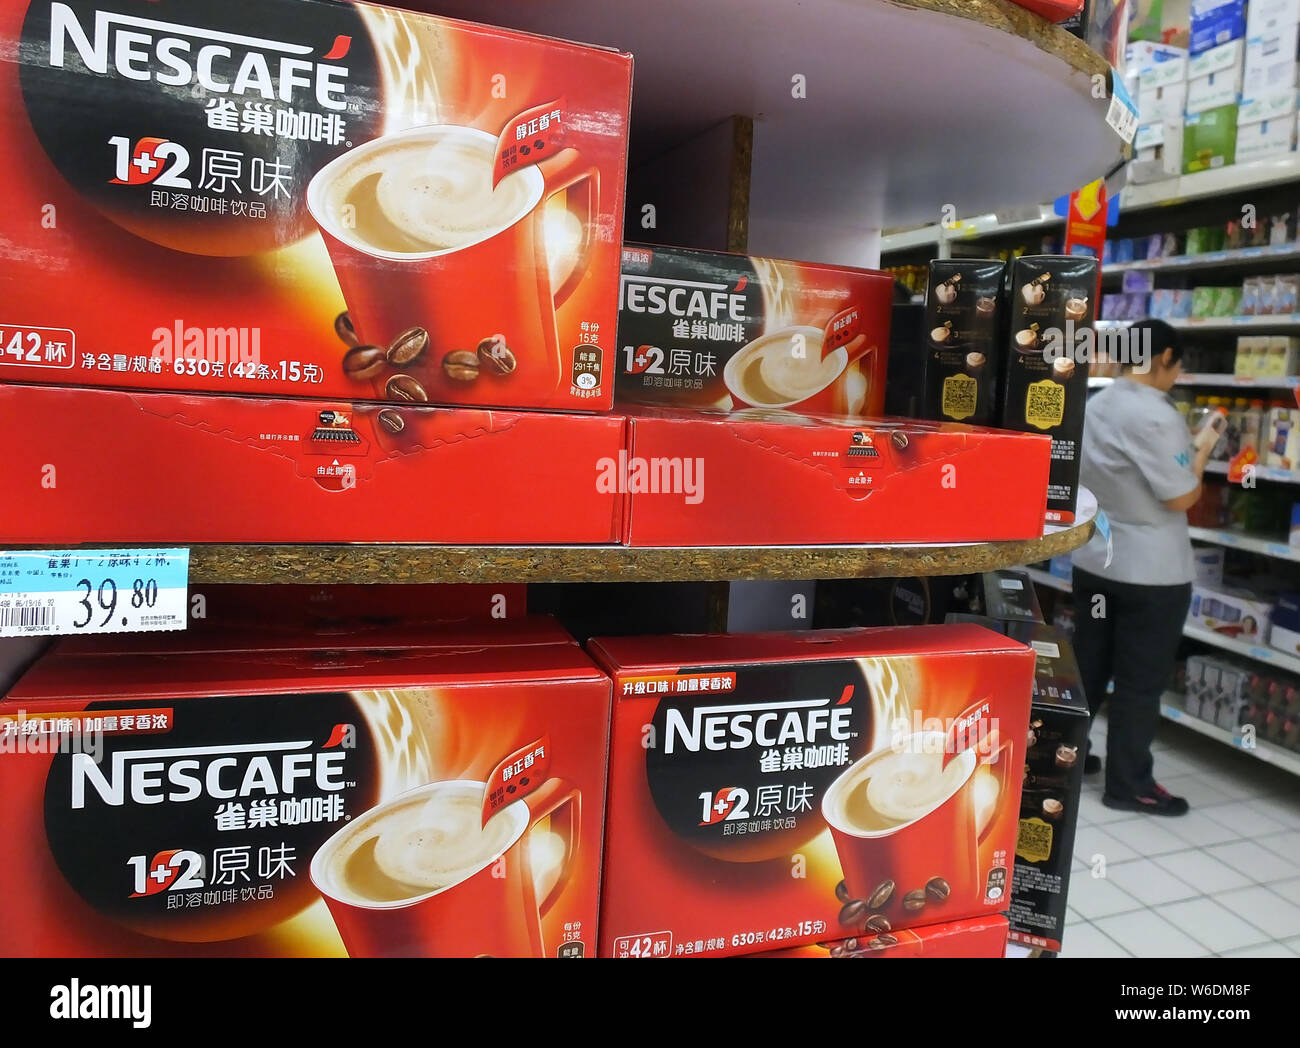 Carugate, October 8, 2017 #Nescafe #Nesquik #Packaging